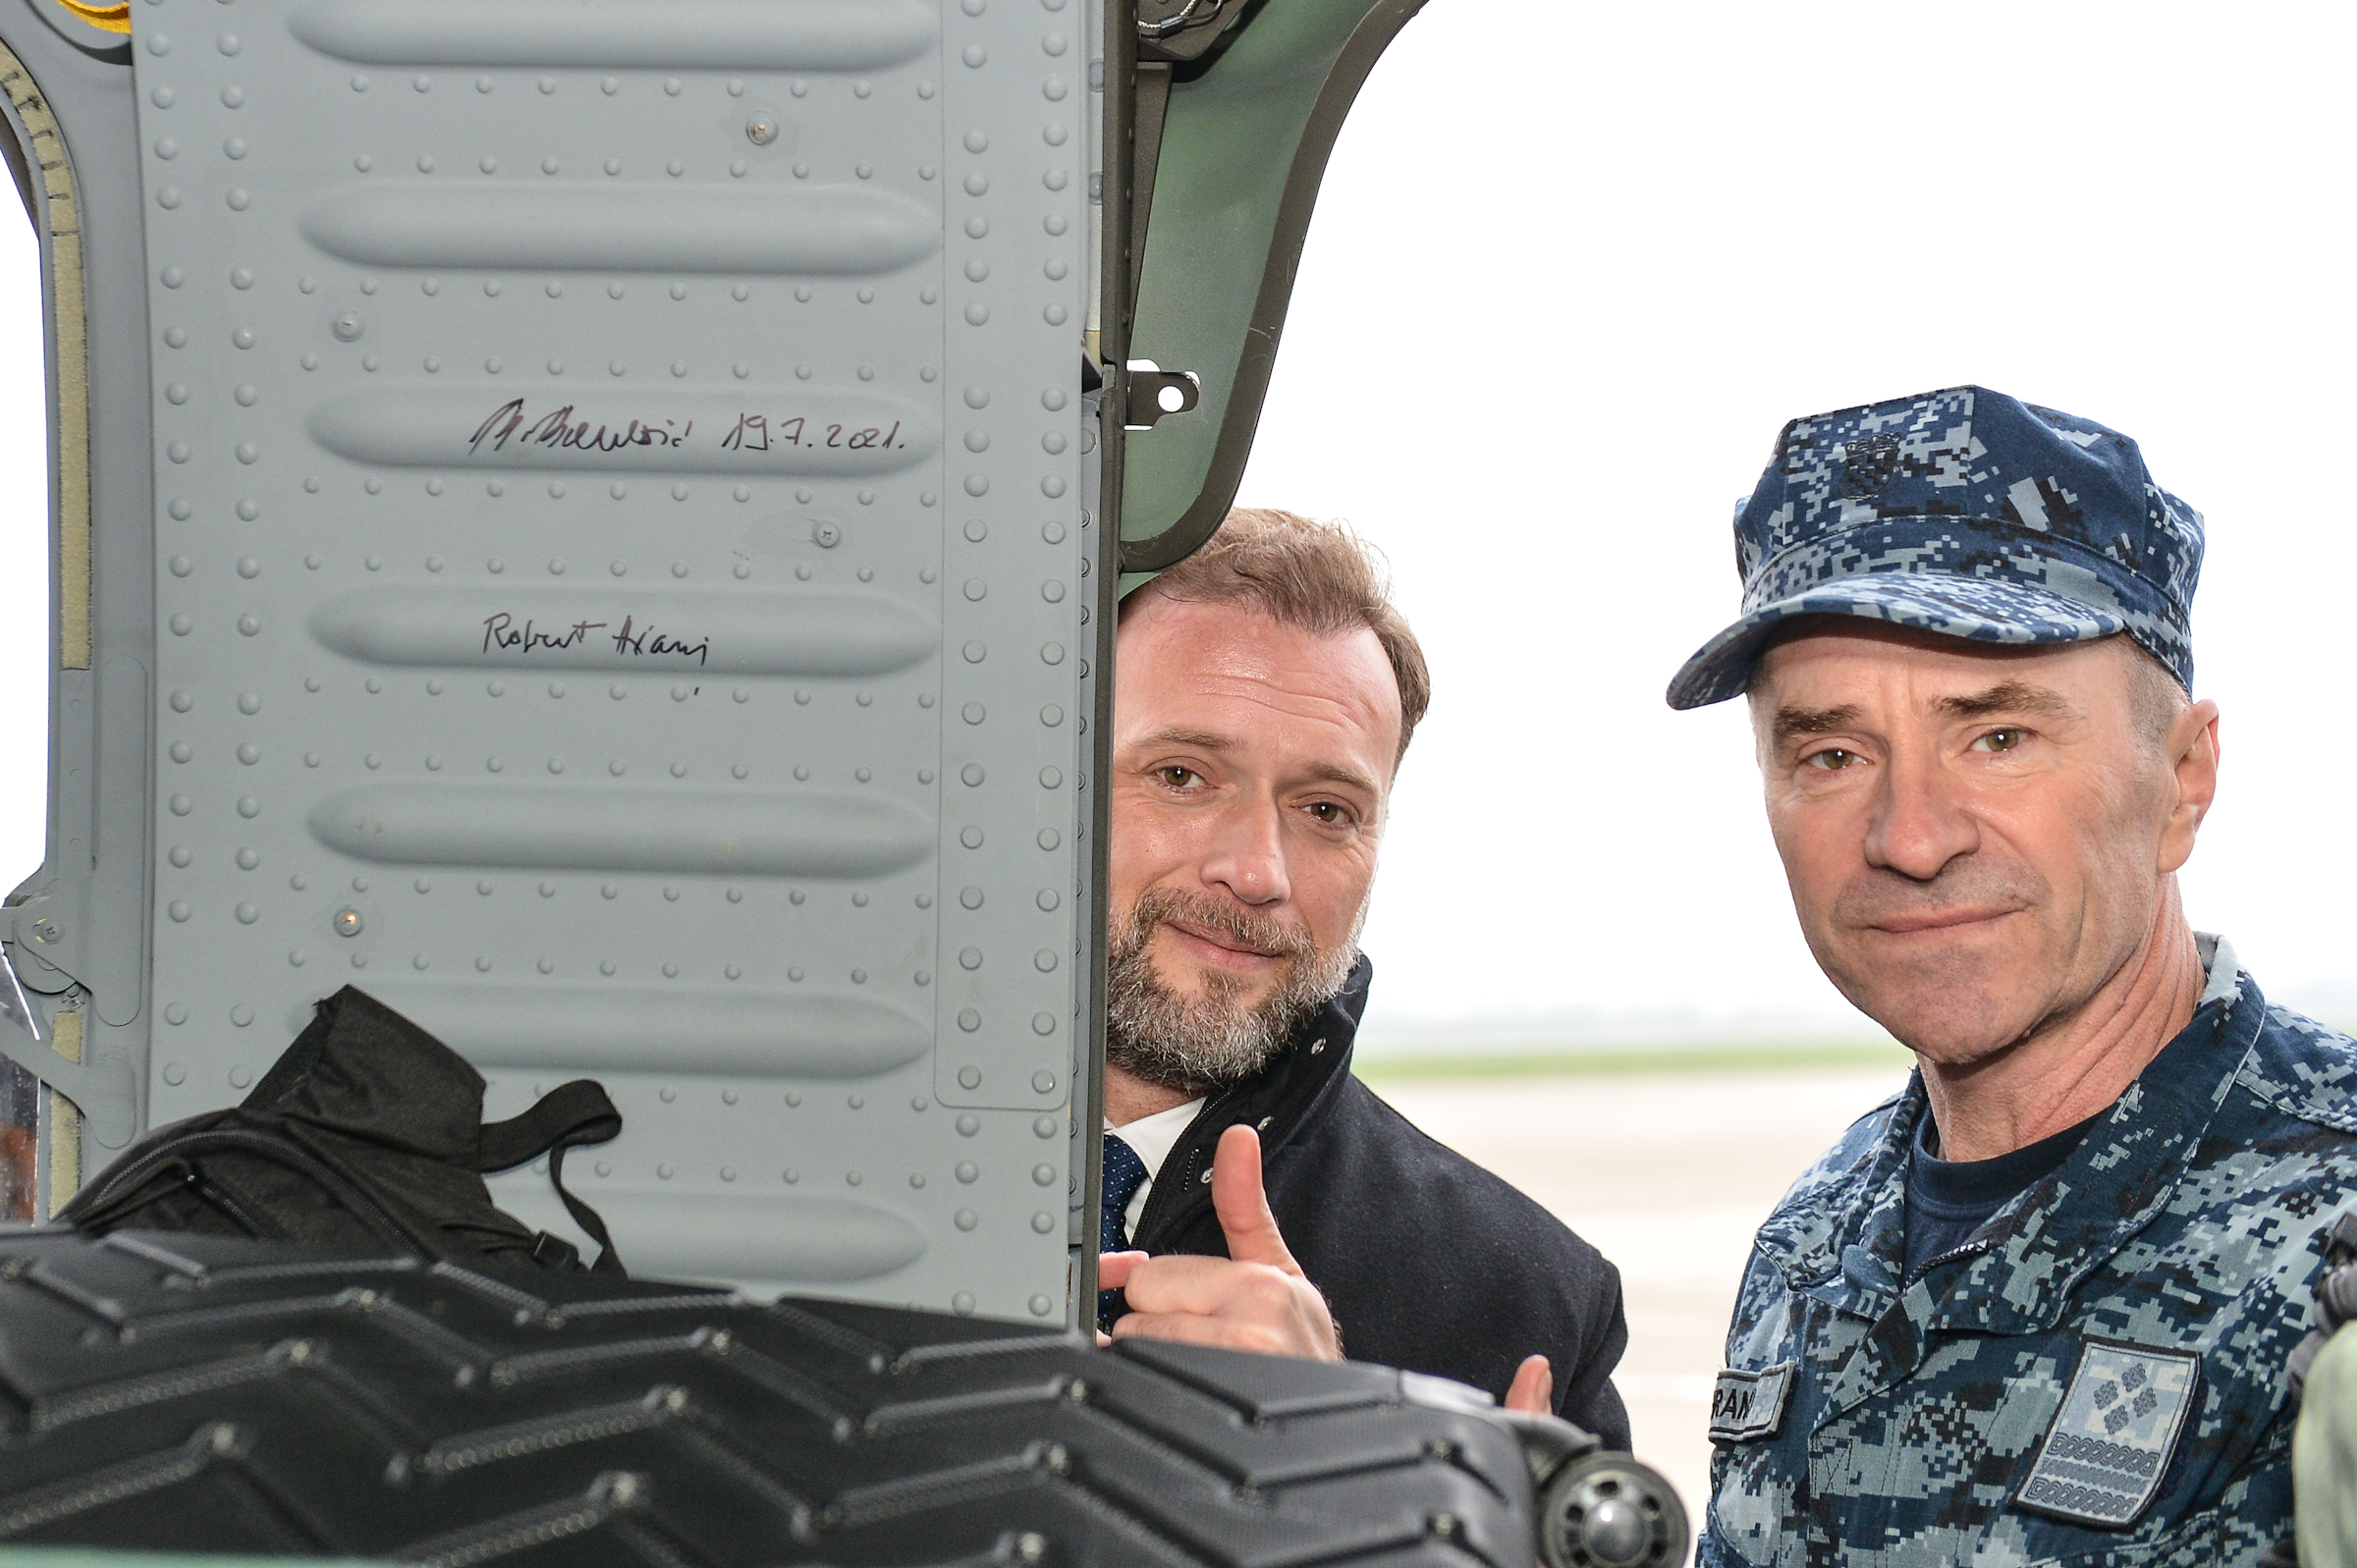 Ministar Banožić i admiral Hranj na prihvatu dva helikoptera UH-60M Black Hawk